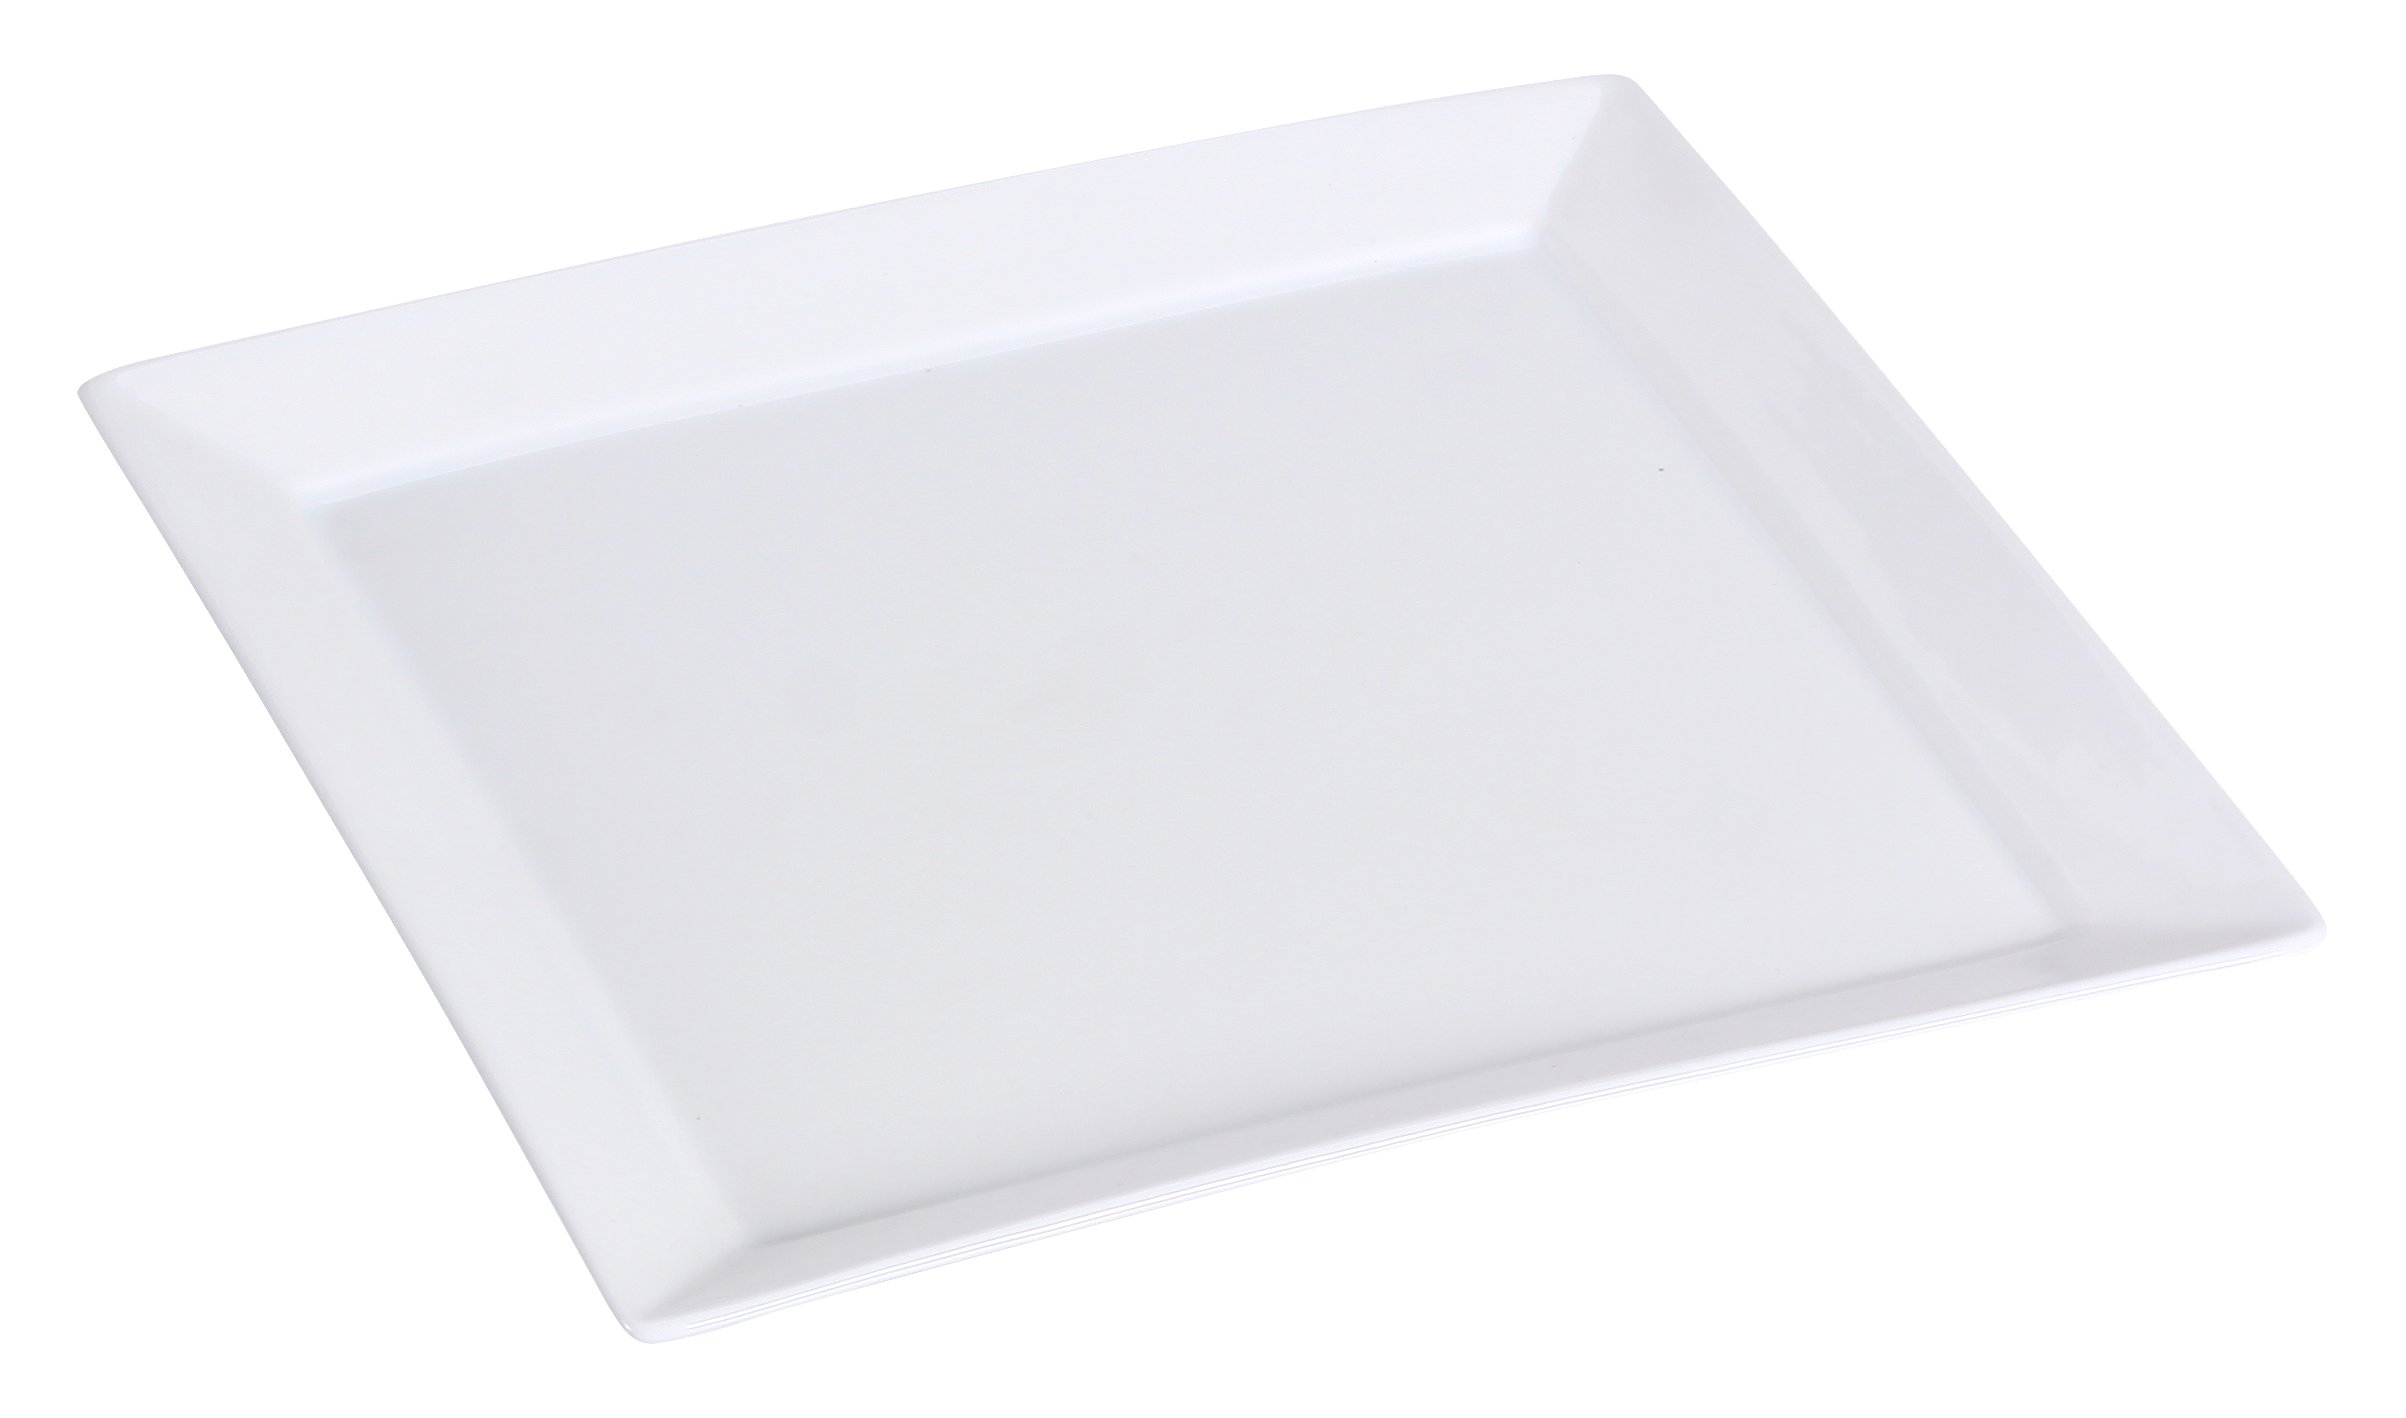 Yanco LK-108 8" Square Plate, Porcelain, Bone White (Pack of 36)